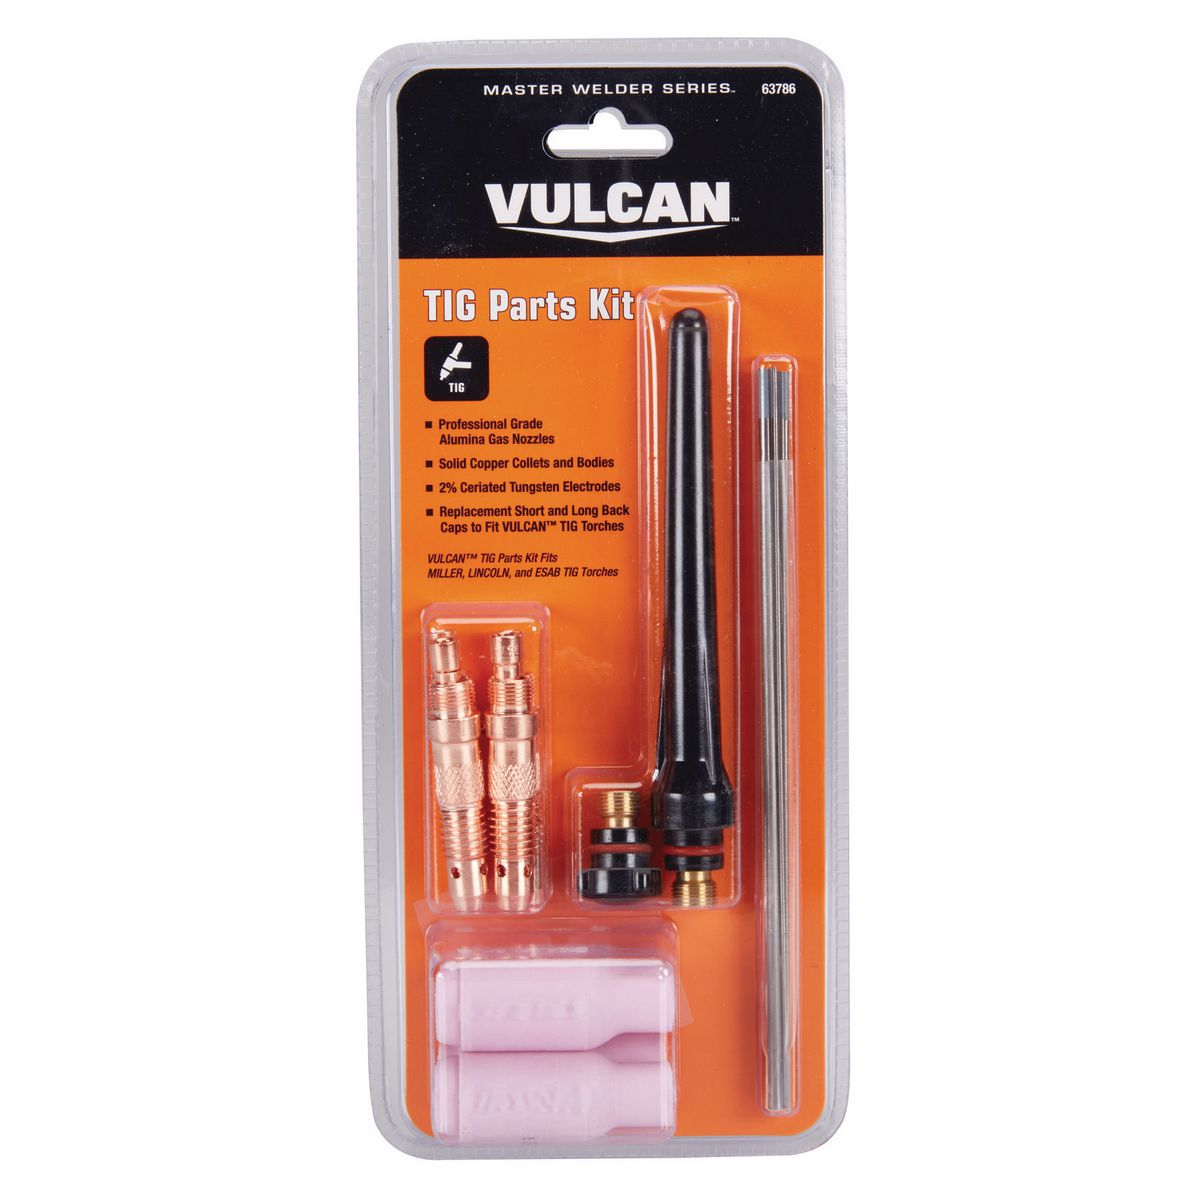 VULCAN TIG Parts Kit - Item 63786